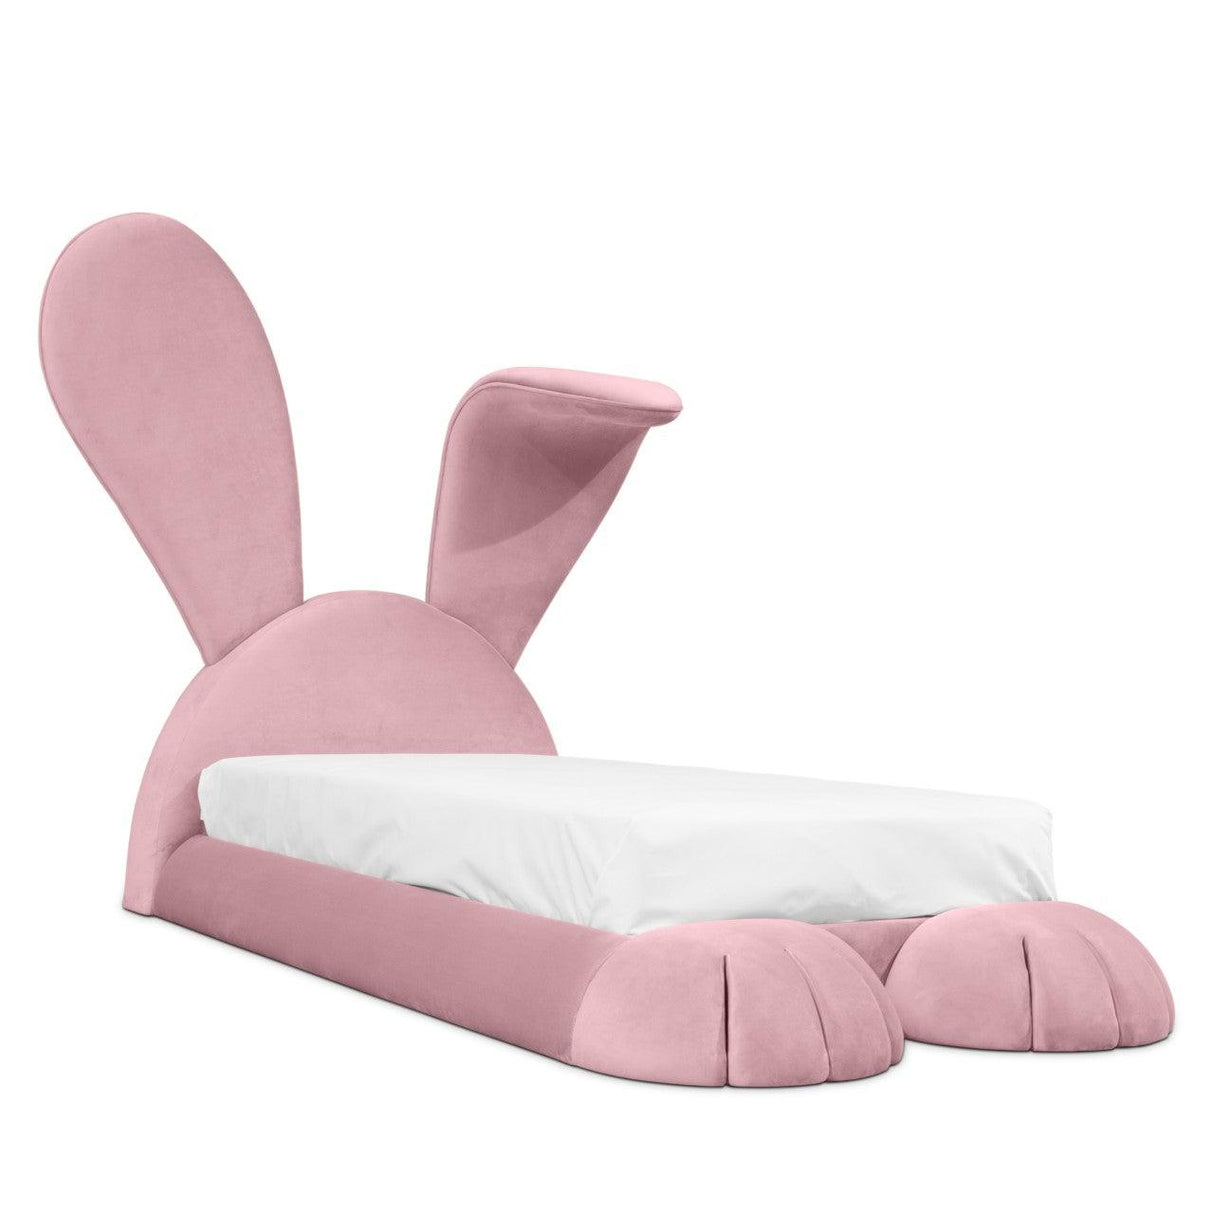 Mr. Bunny Luxury Children's Bed By Circu - Little Snoozes